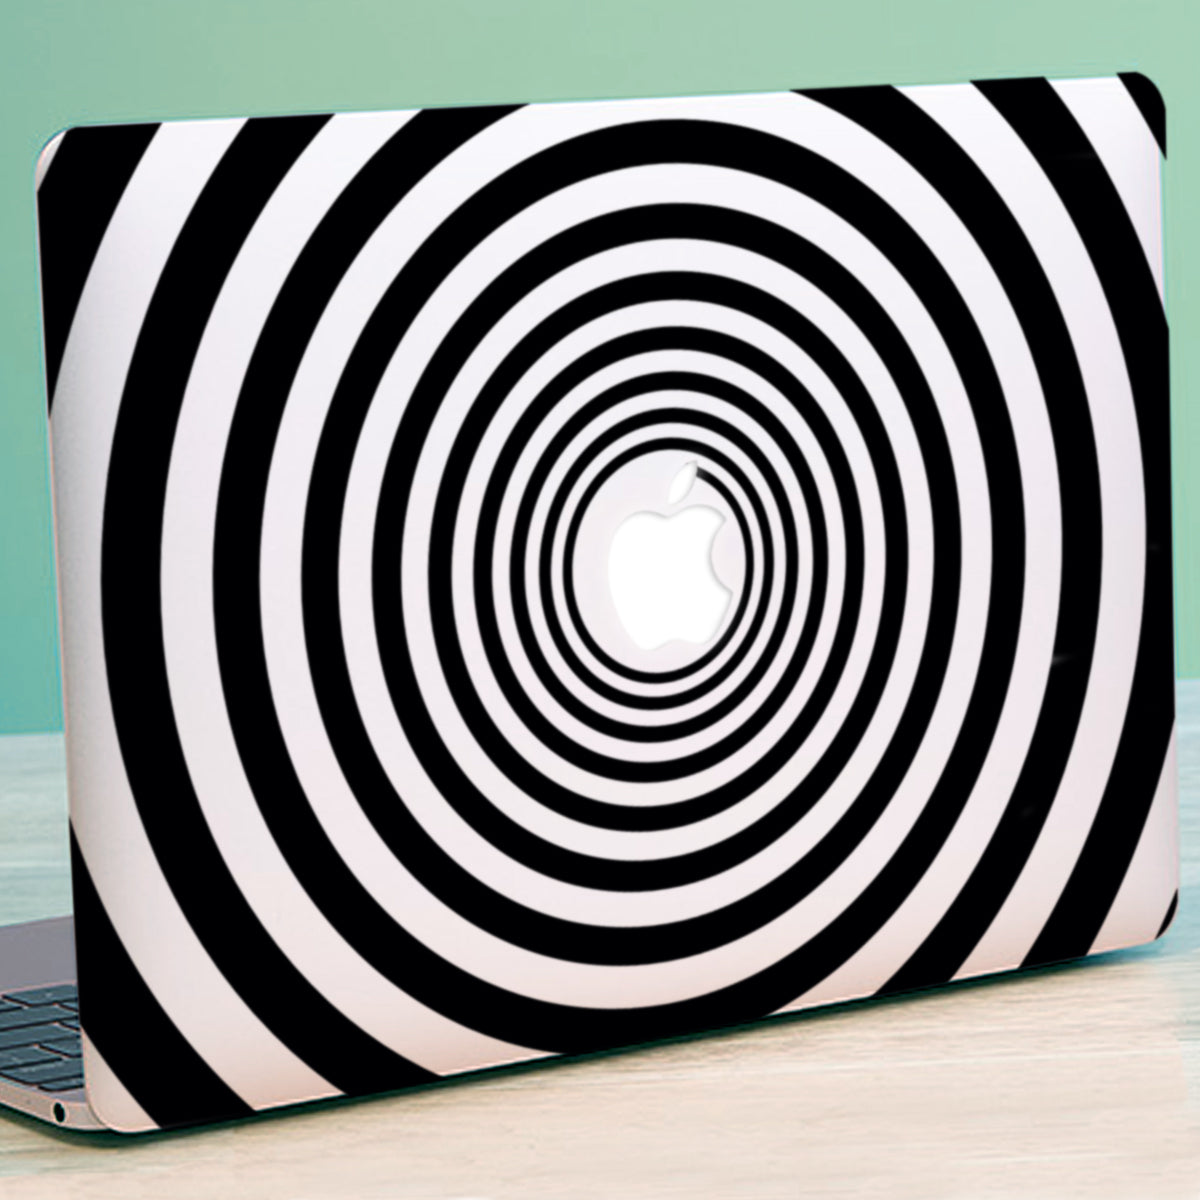 Spiral illusion Macbook Decal